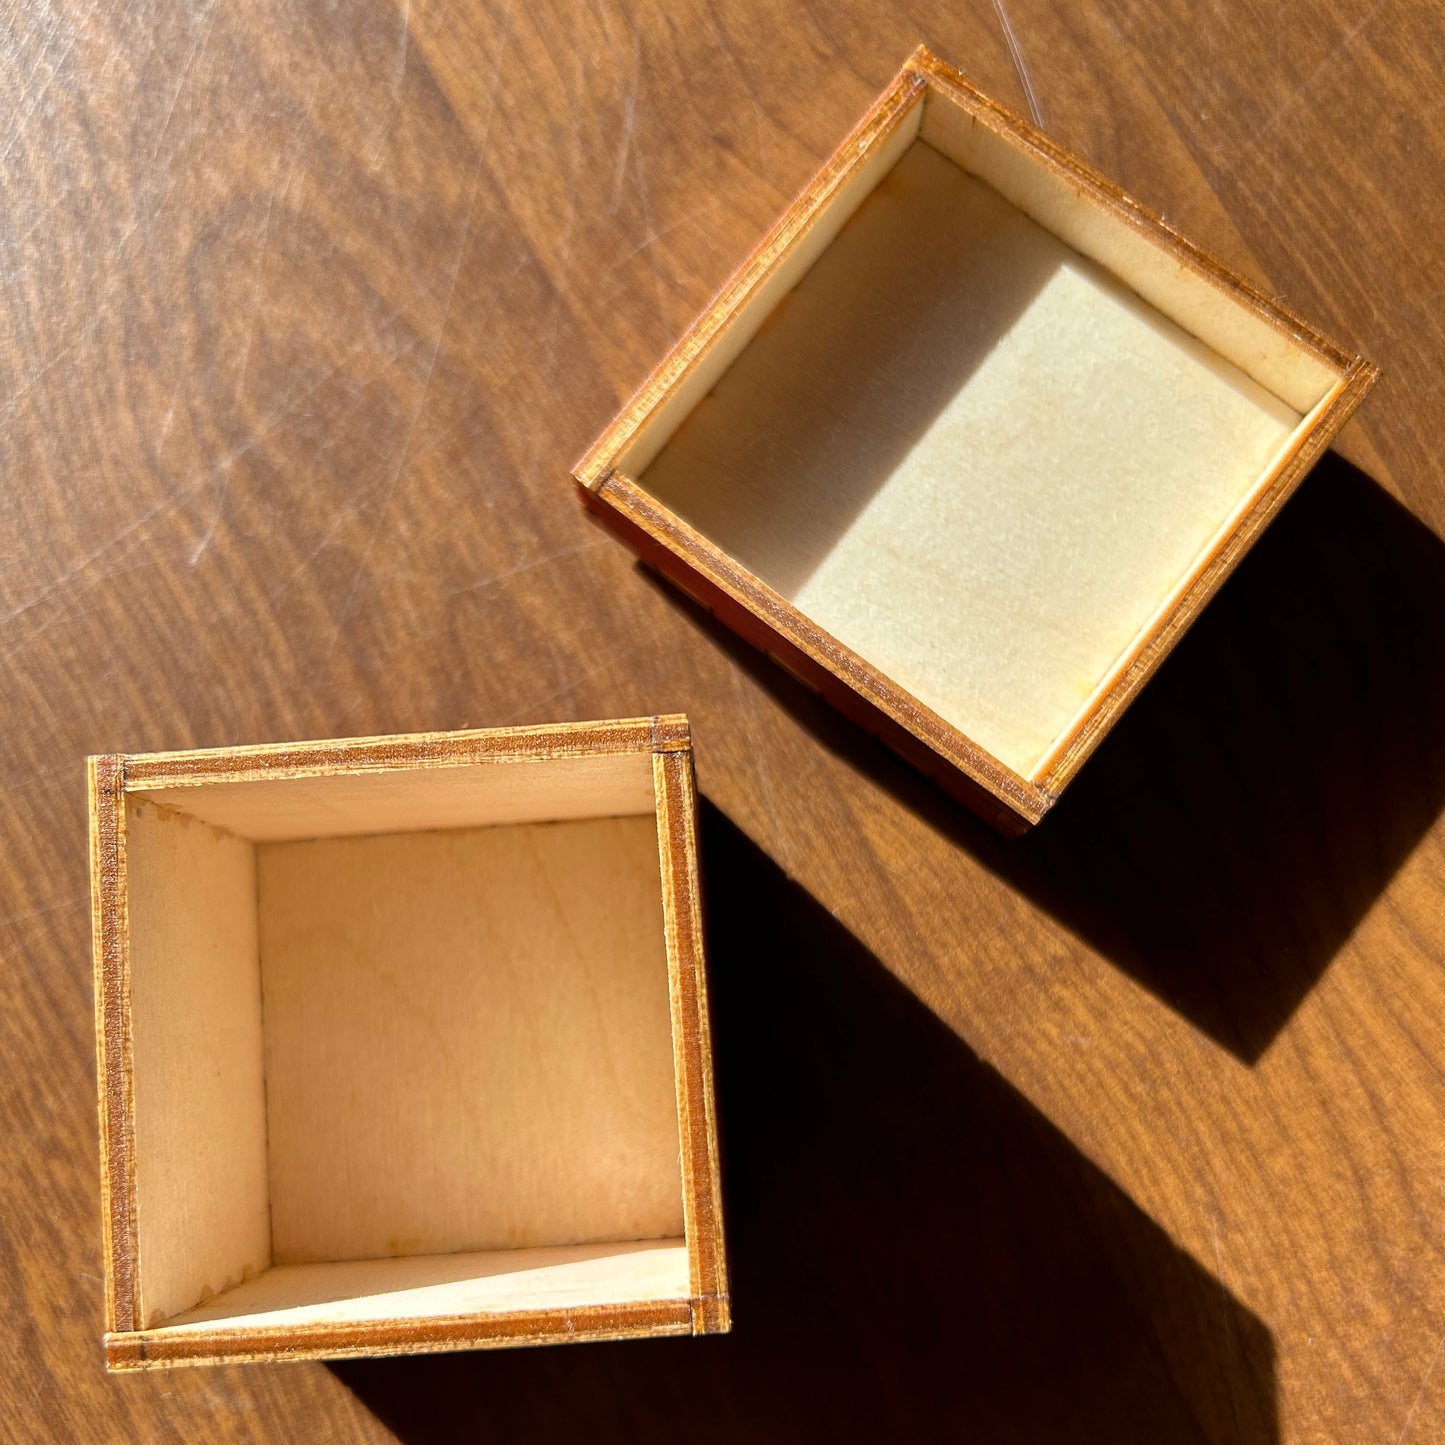 Golden hour bunny and bumble bee tiny treasure box